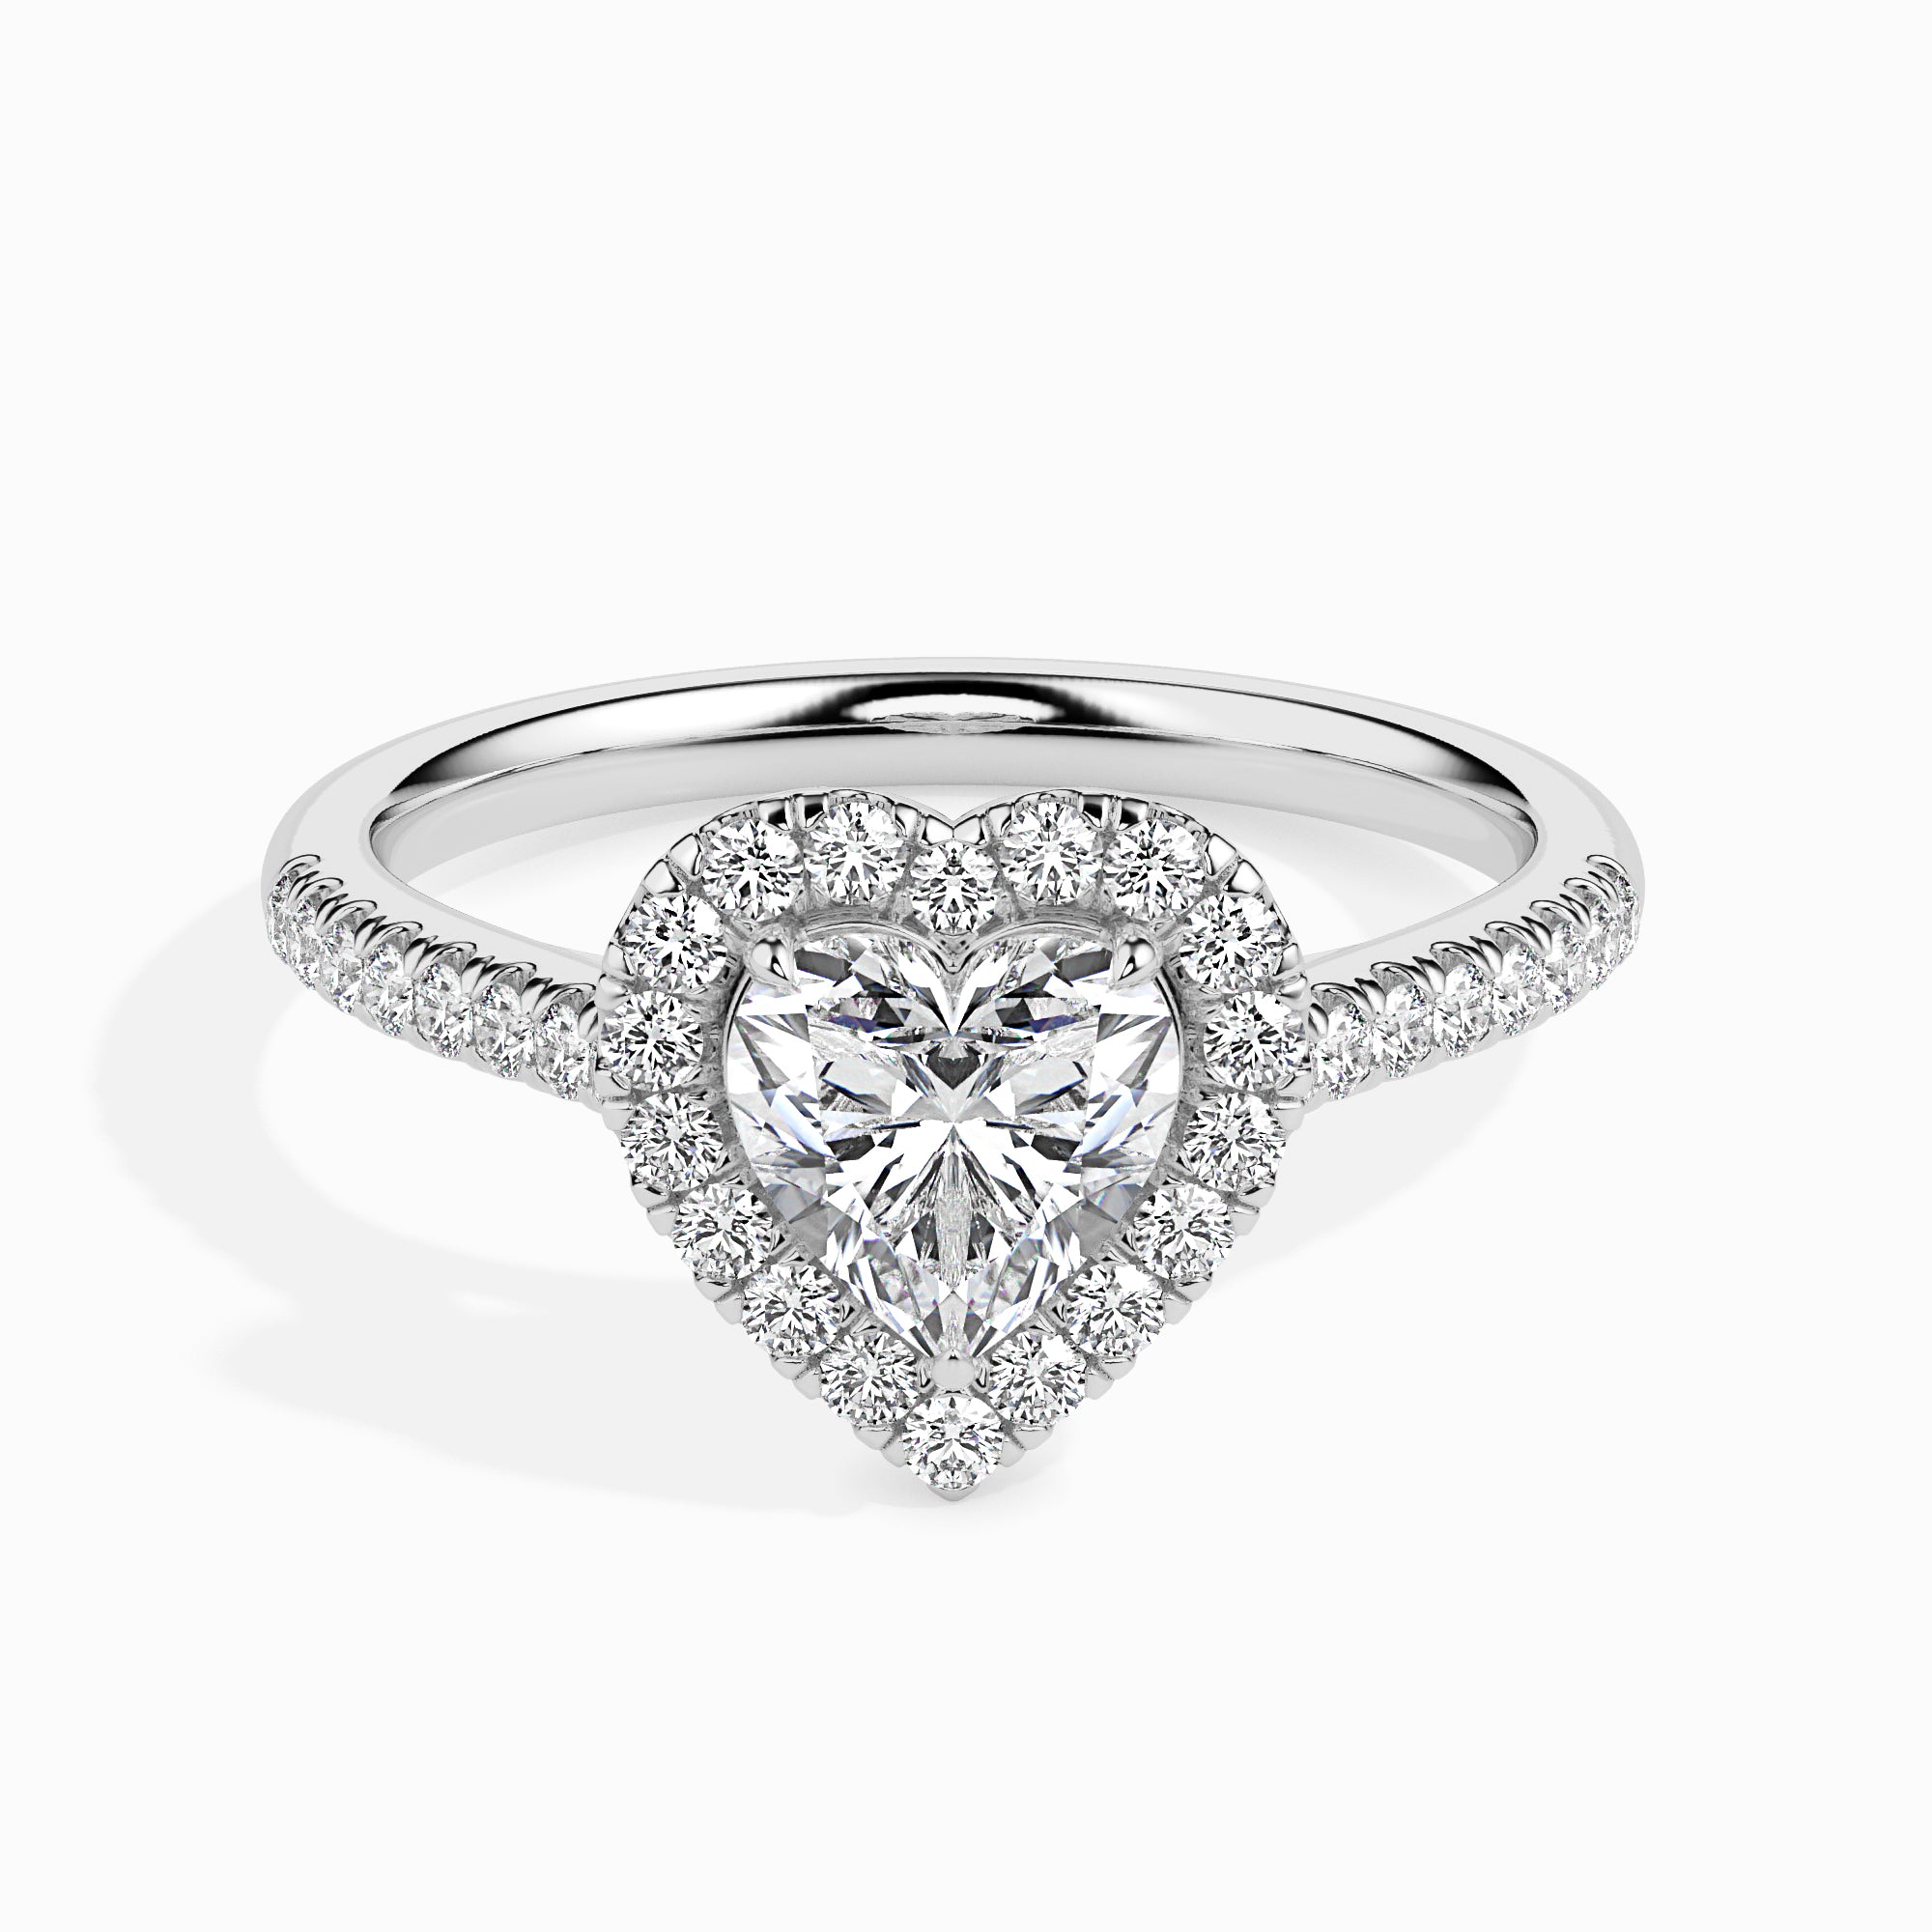 50-Pointer Heart Cut Solitaire Halo Diamond Shank Platinum Ring JL PT 19038-A